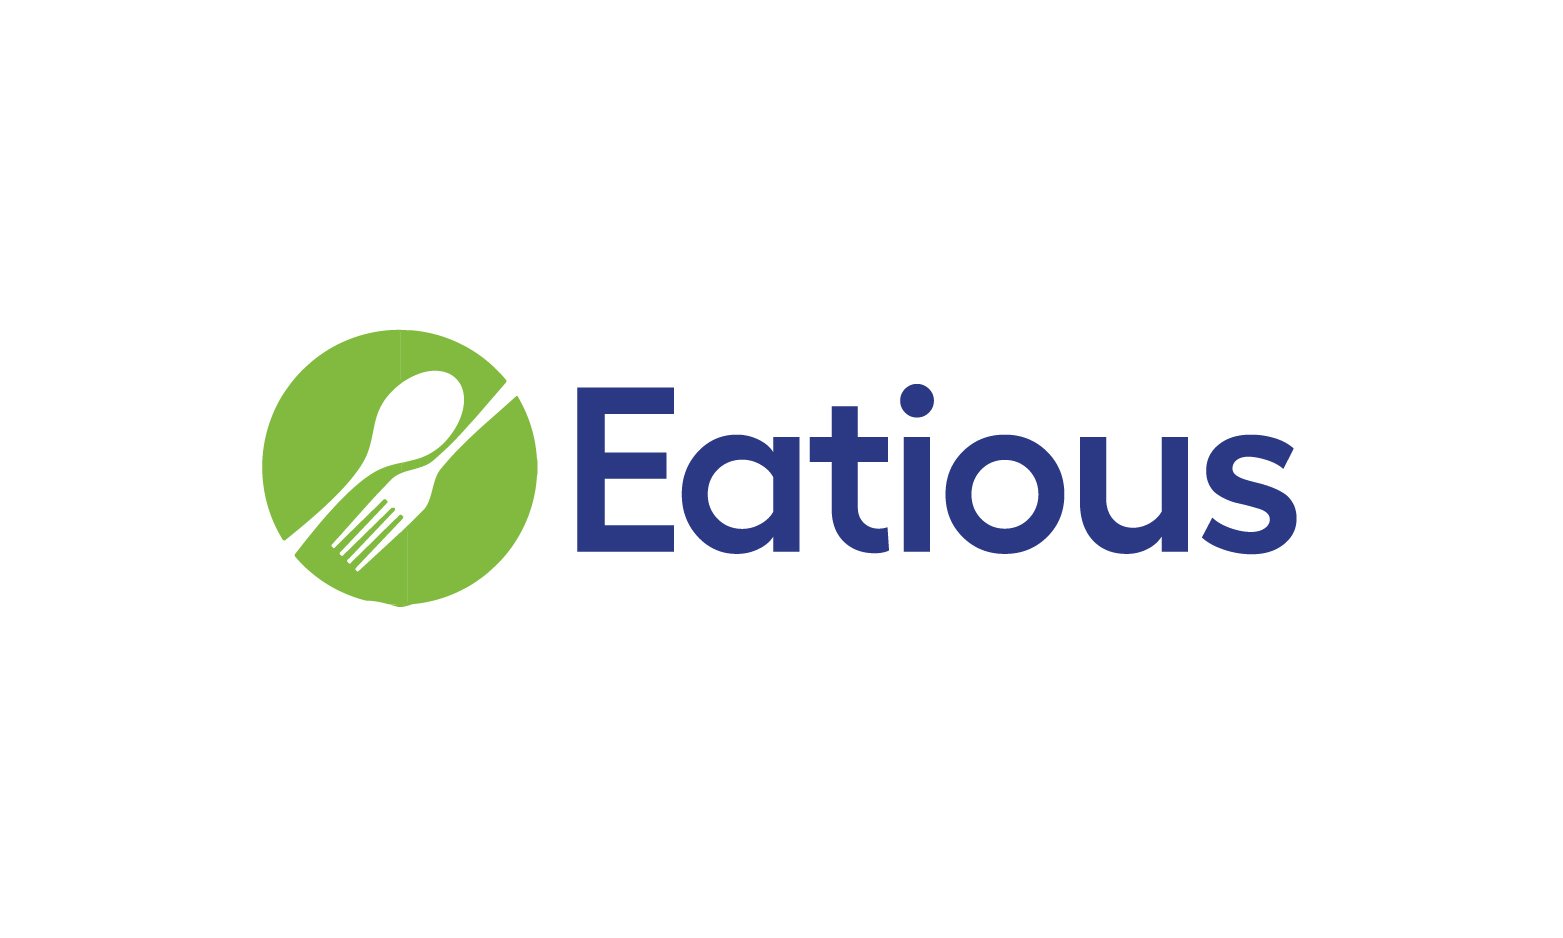 Eatious.com - Creative brandable domain for sale